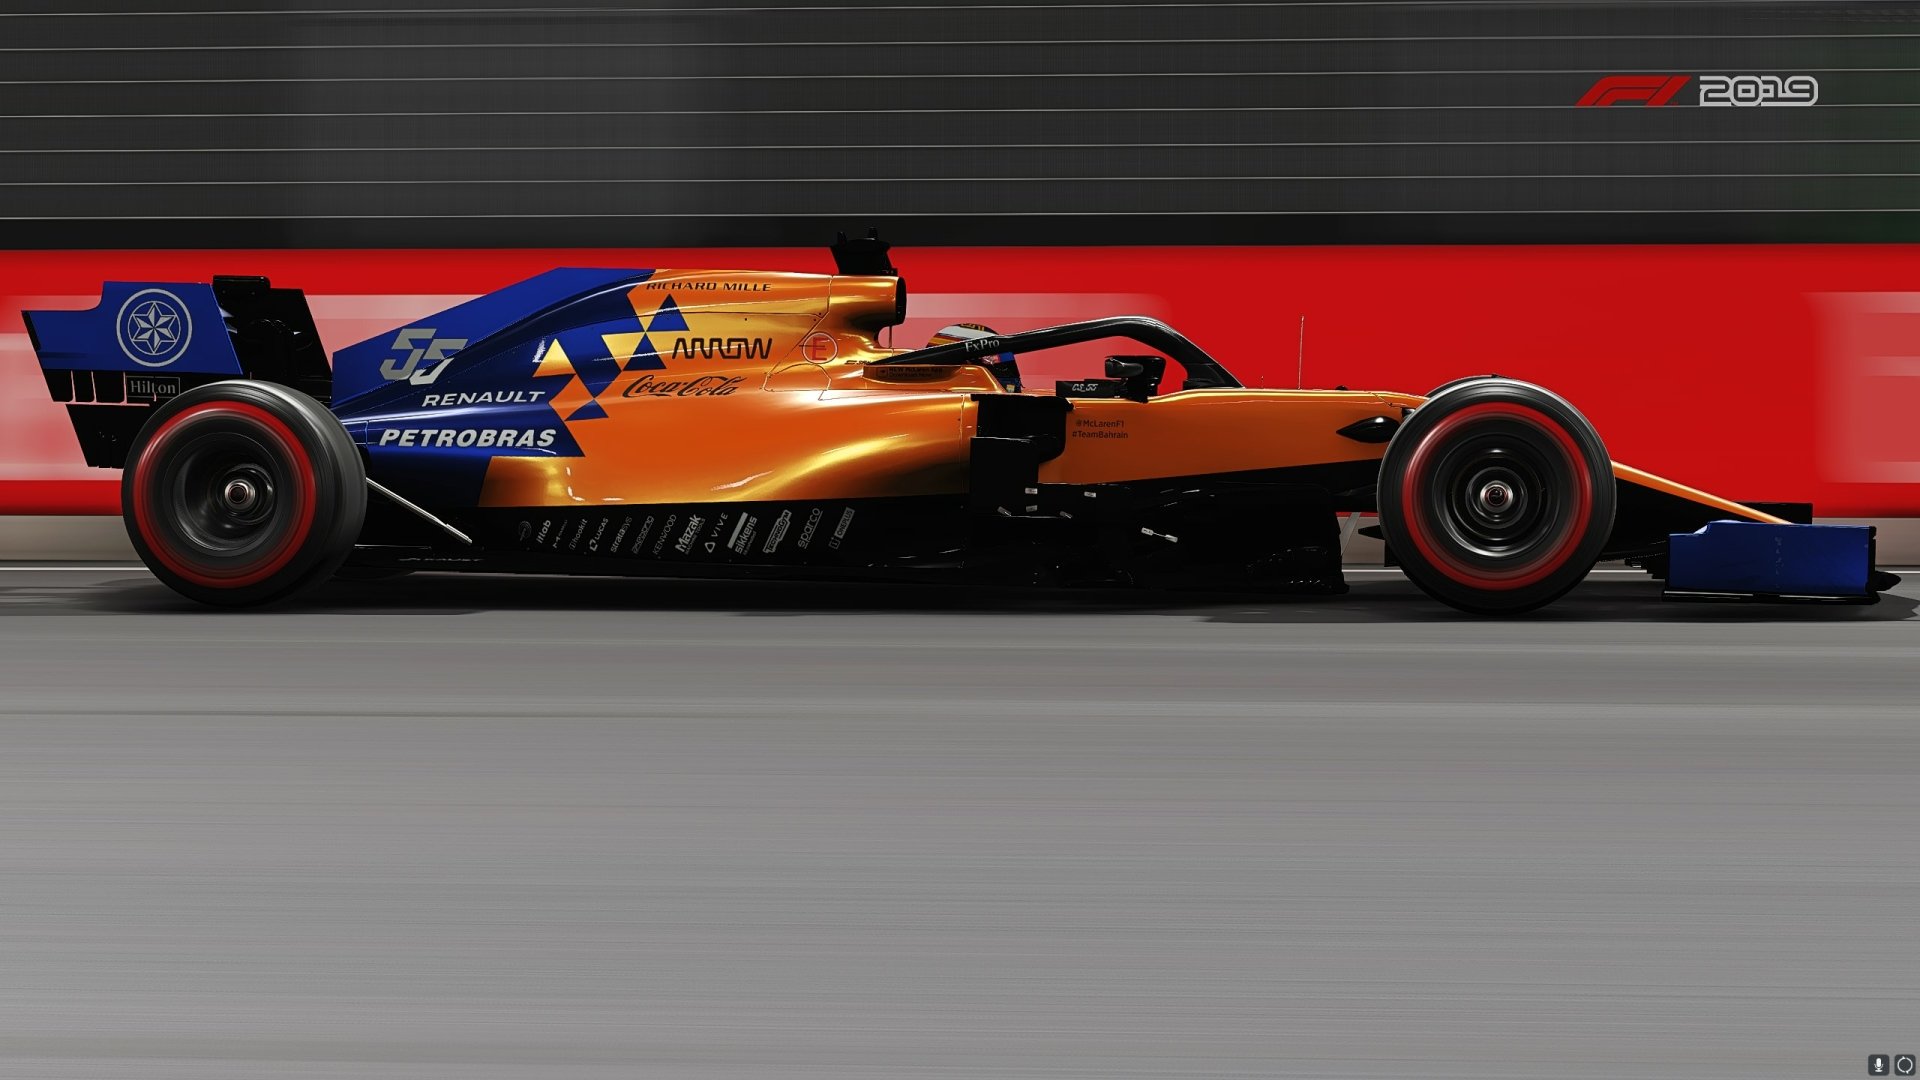 2019 McLaren MCL34